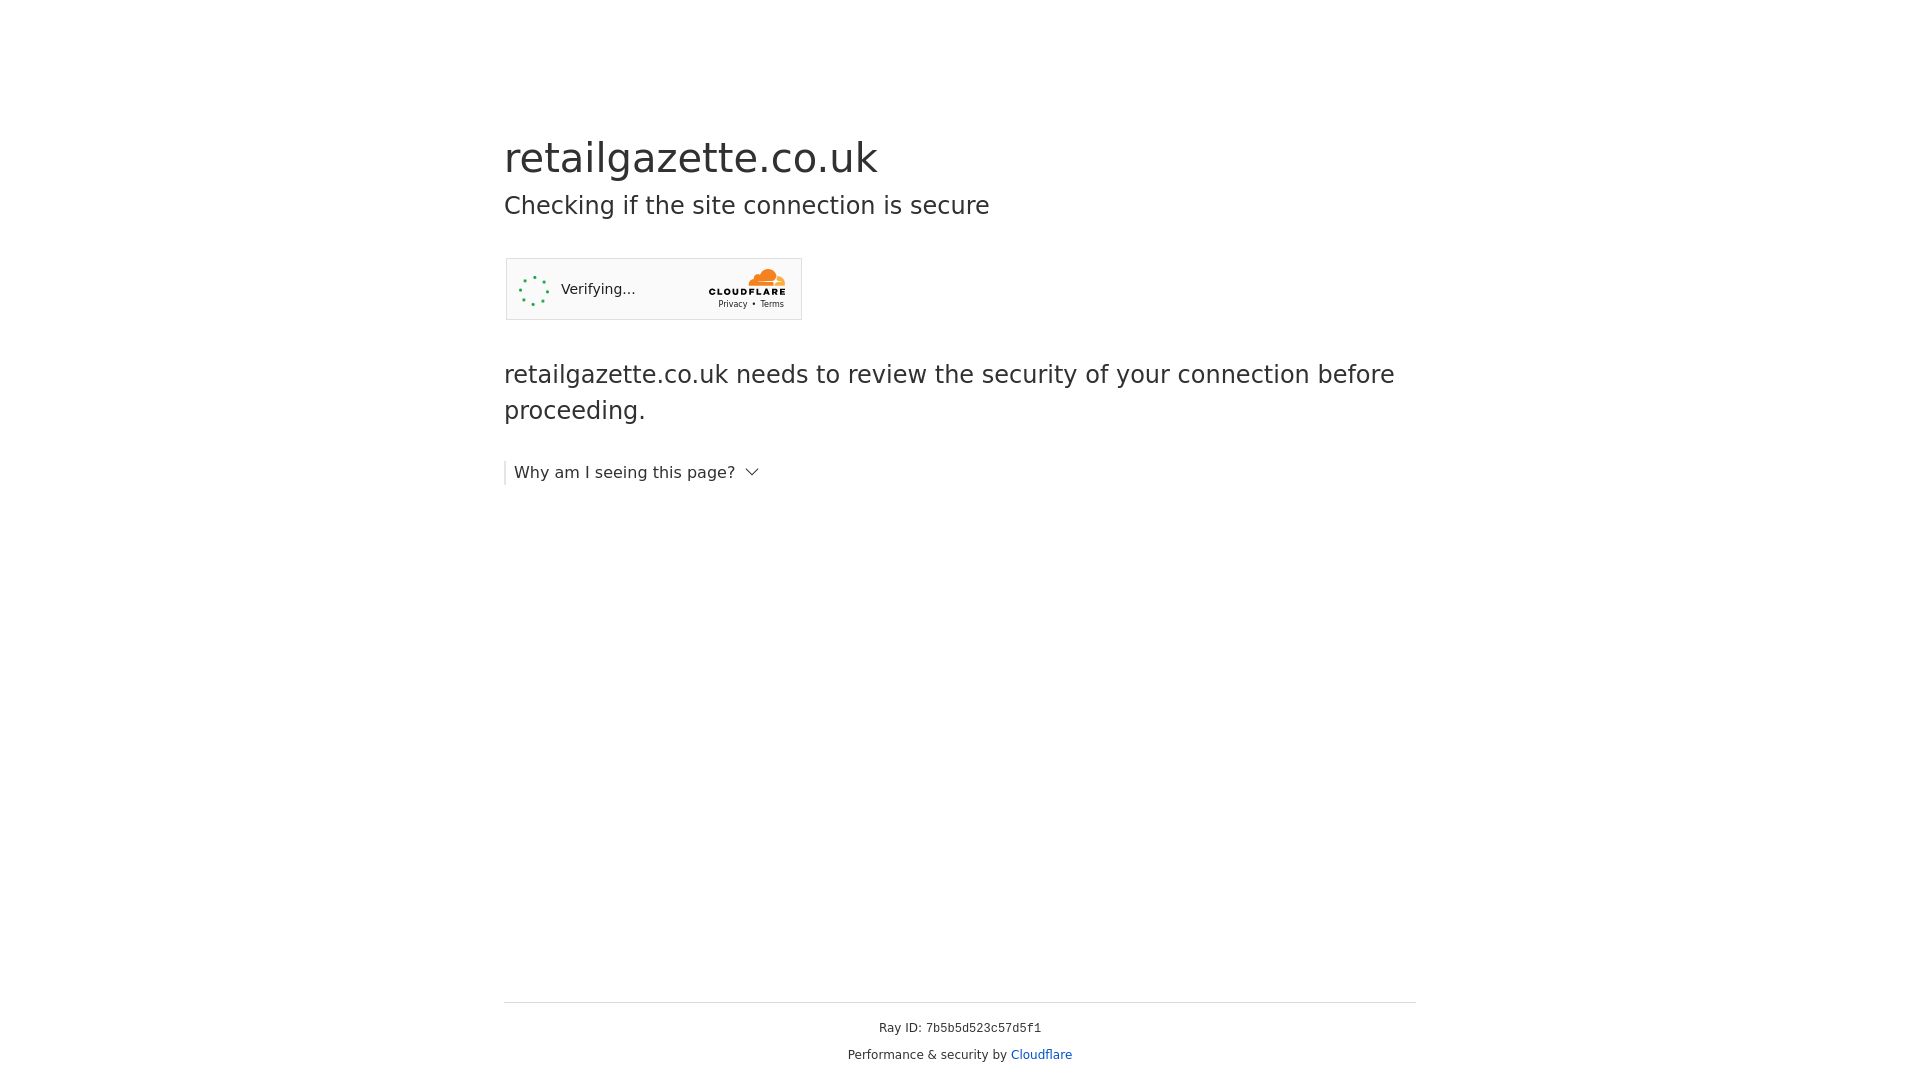 вебсайт retailgazette.co.uk Є   ONLINE